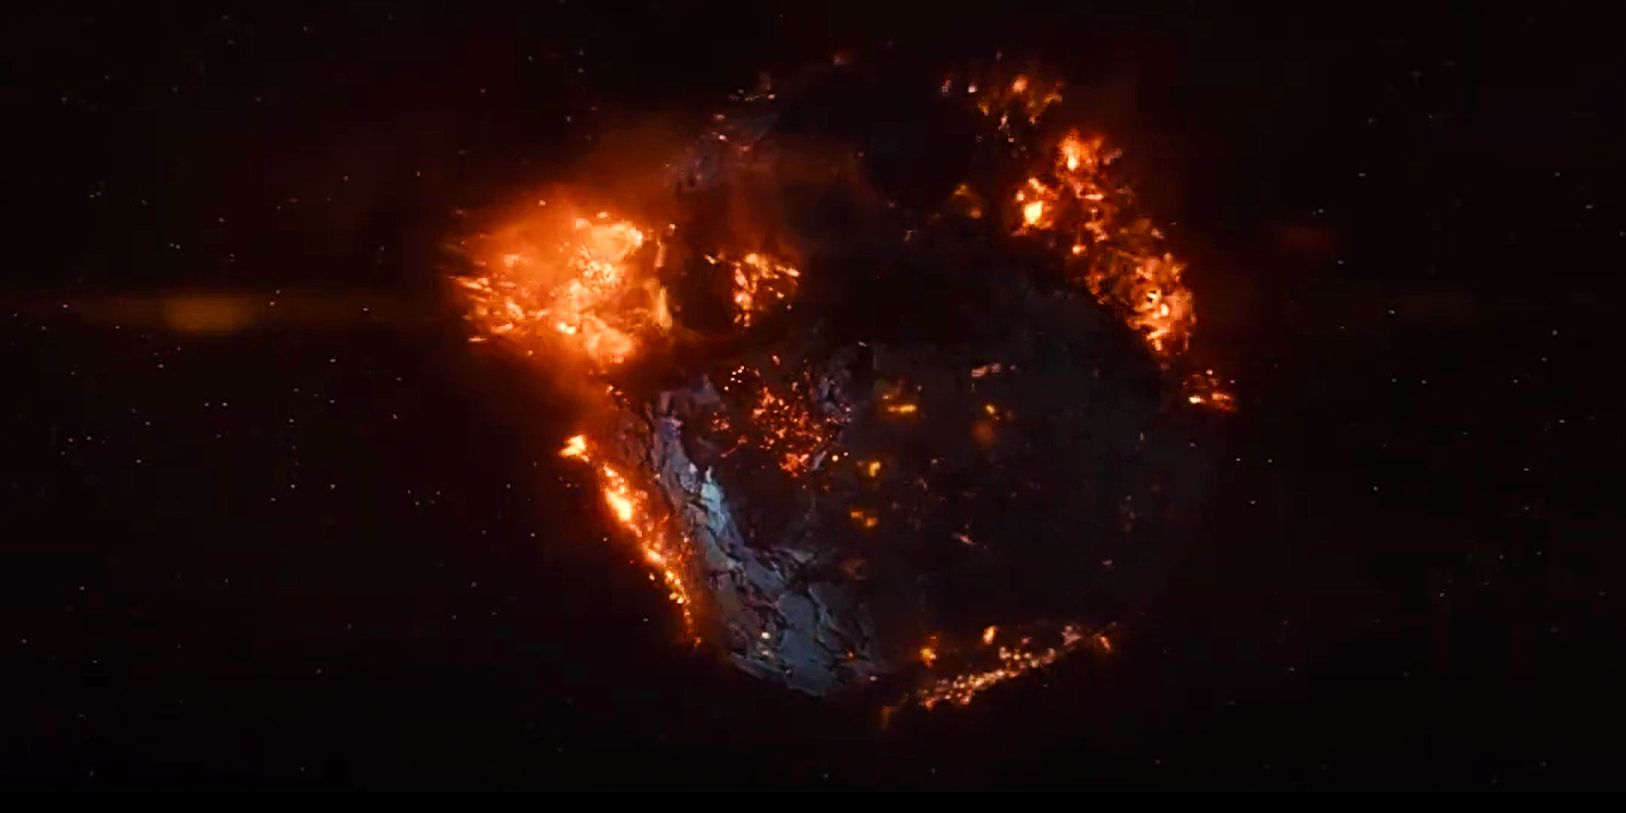 Starkiller Base explosion in Star Wars The Force Awakens